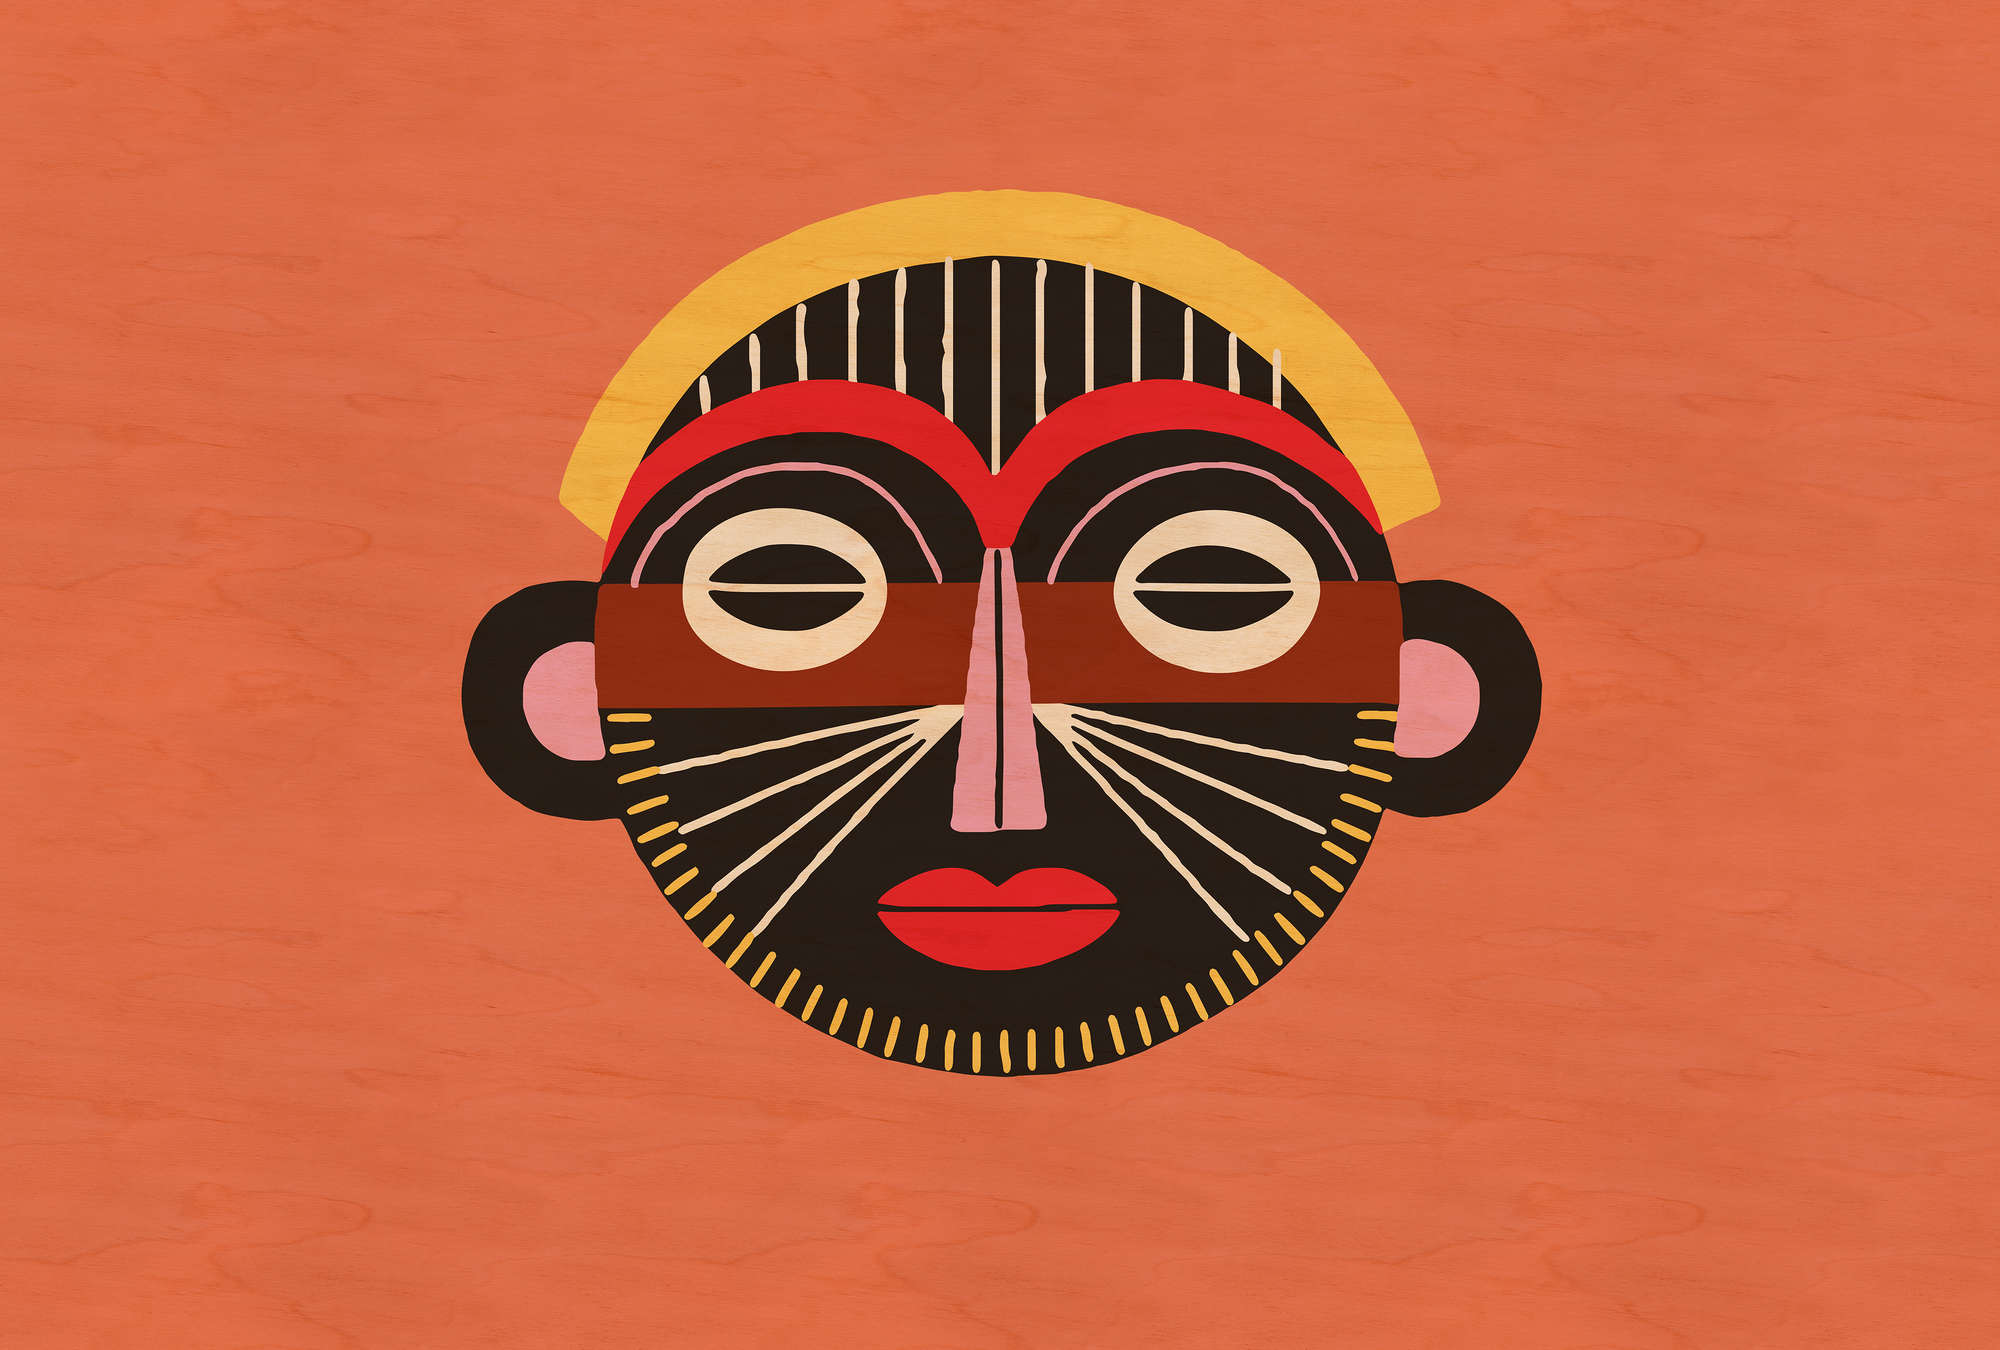             Overseas 2 – Ethno Fototapete Maske im Tribal Design
        